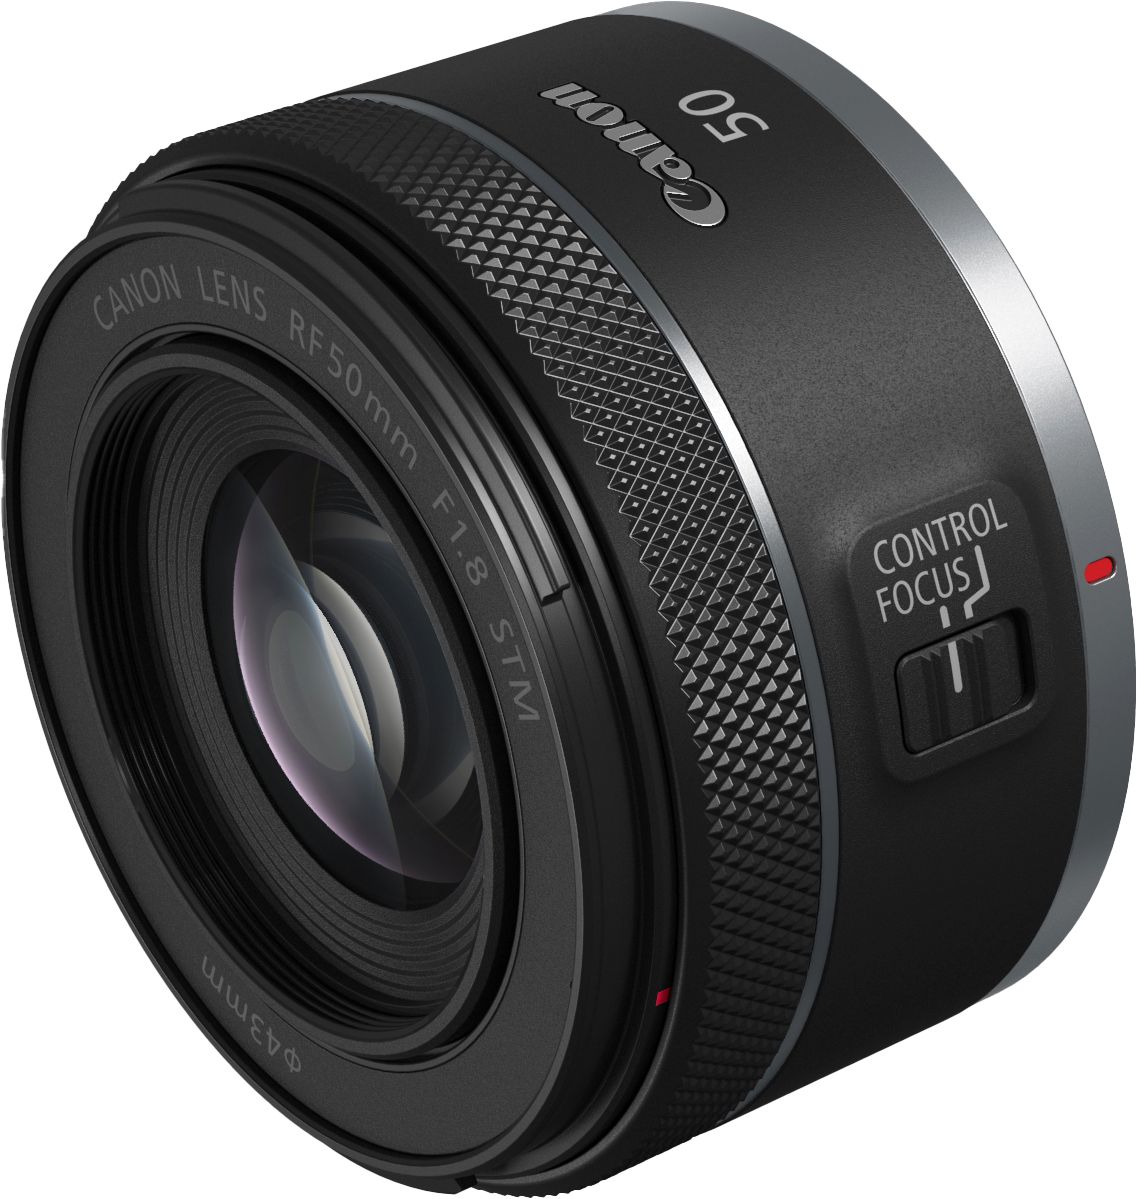 Canon EF 50mm f/1.8 STM Standard prime lens for Canon EOS SLR cameras at  Crutchfield